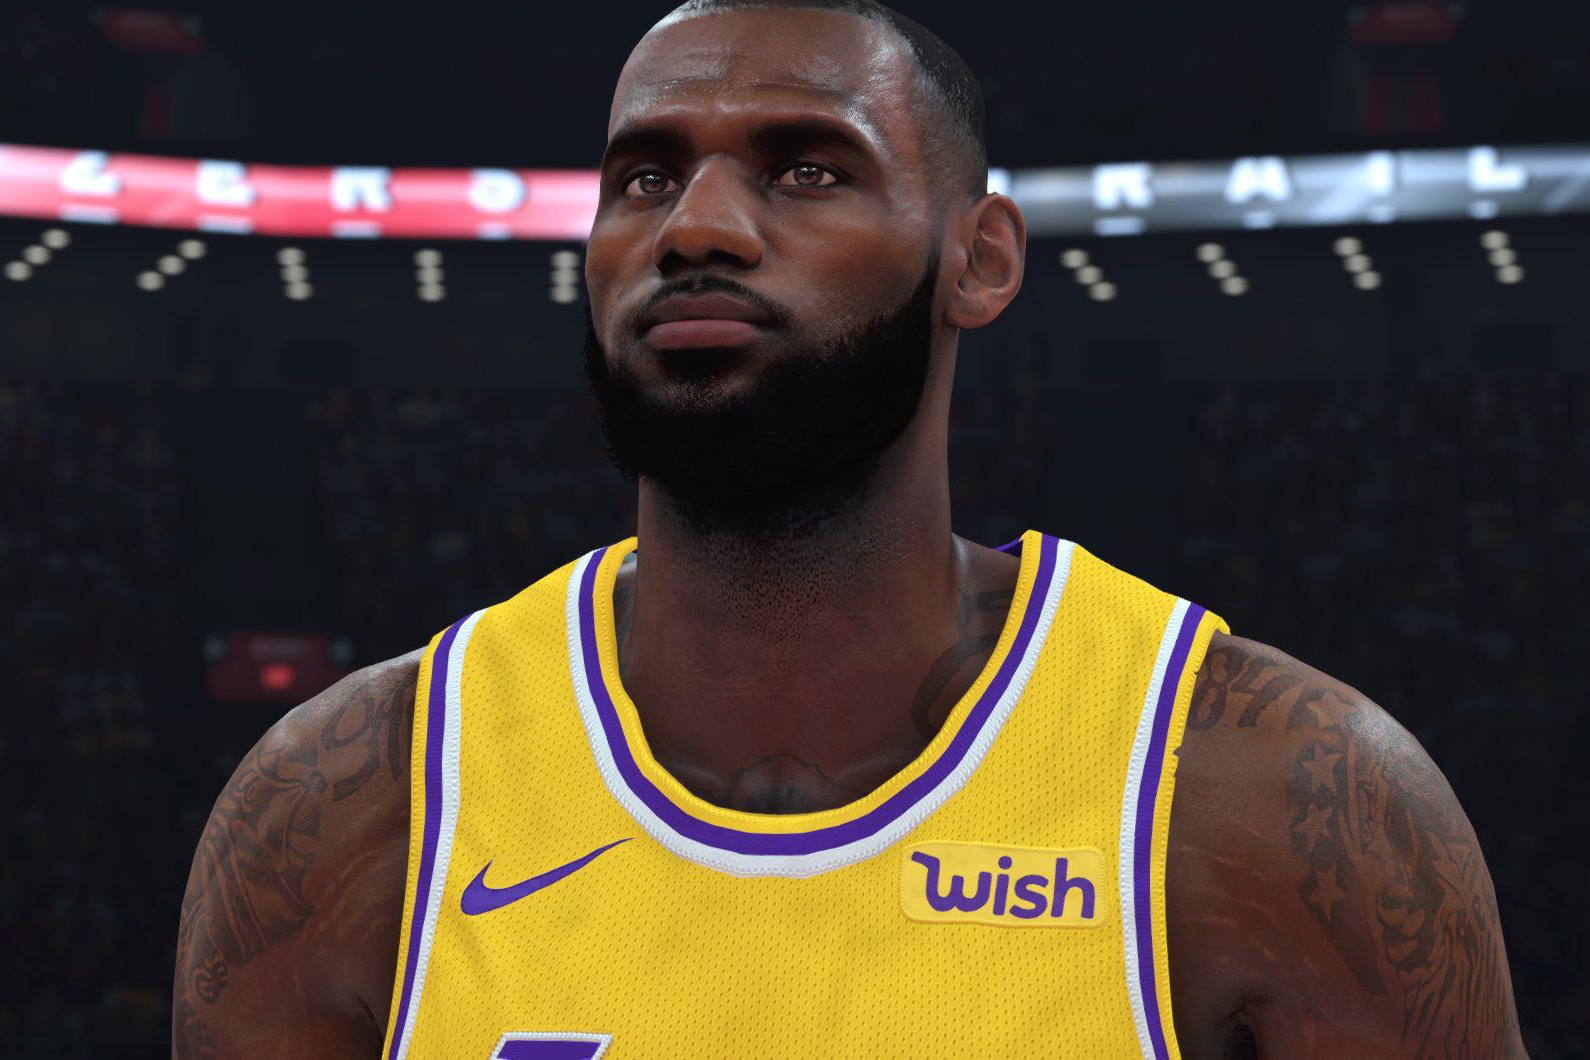 《NBA 2K19》迎来最新一期球员能力值数据更新